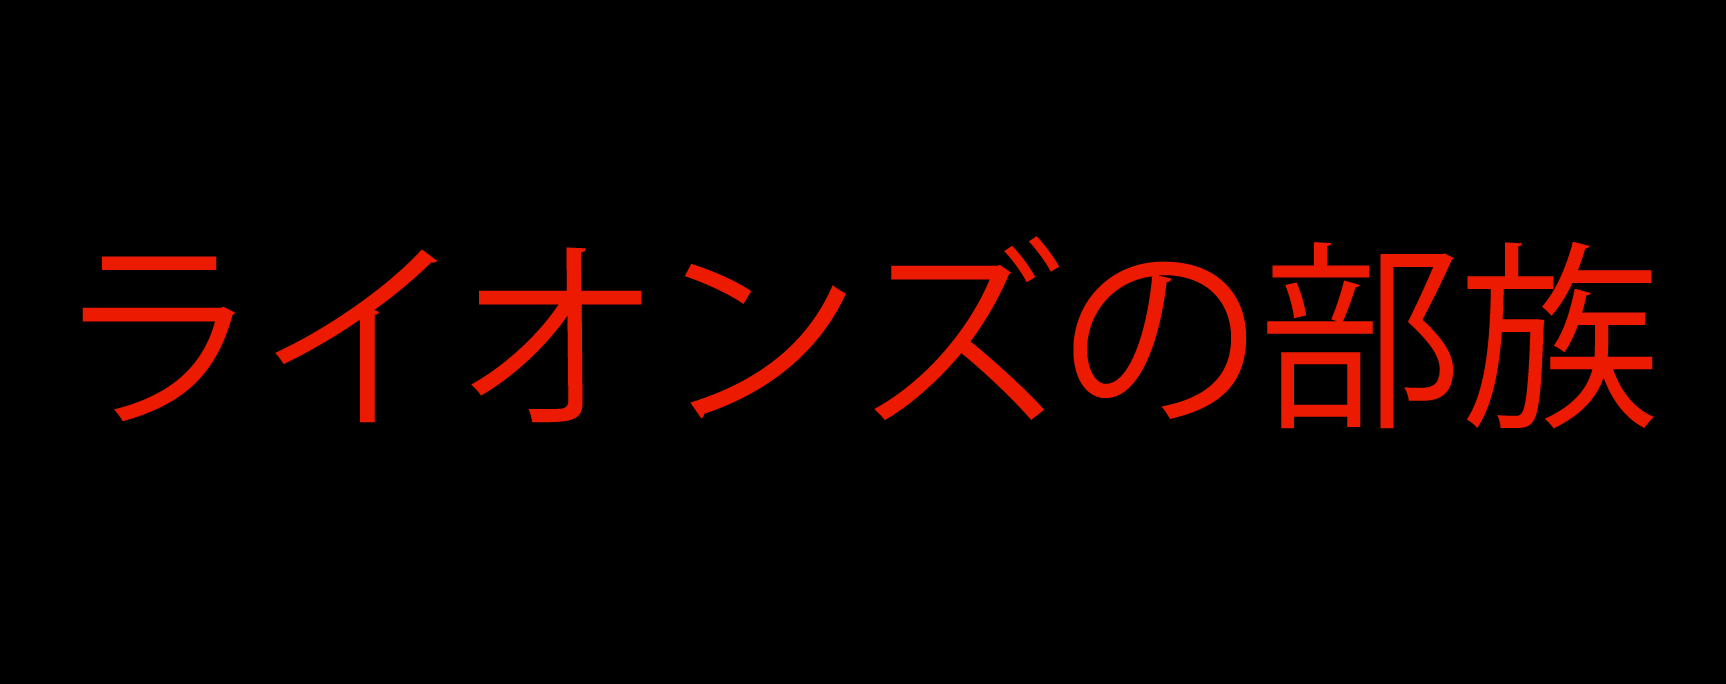 Black Japanese Logo - Tribes of Lions Logo (Japanese Black Background)